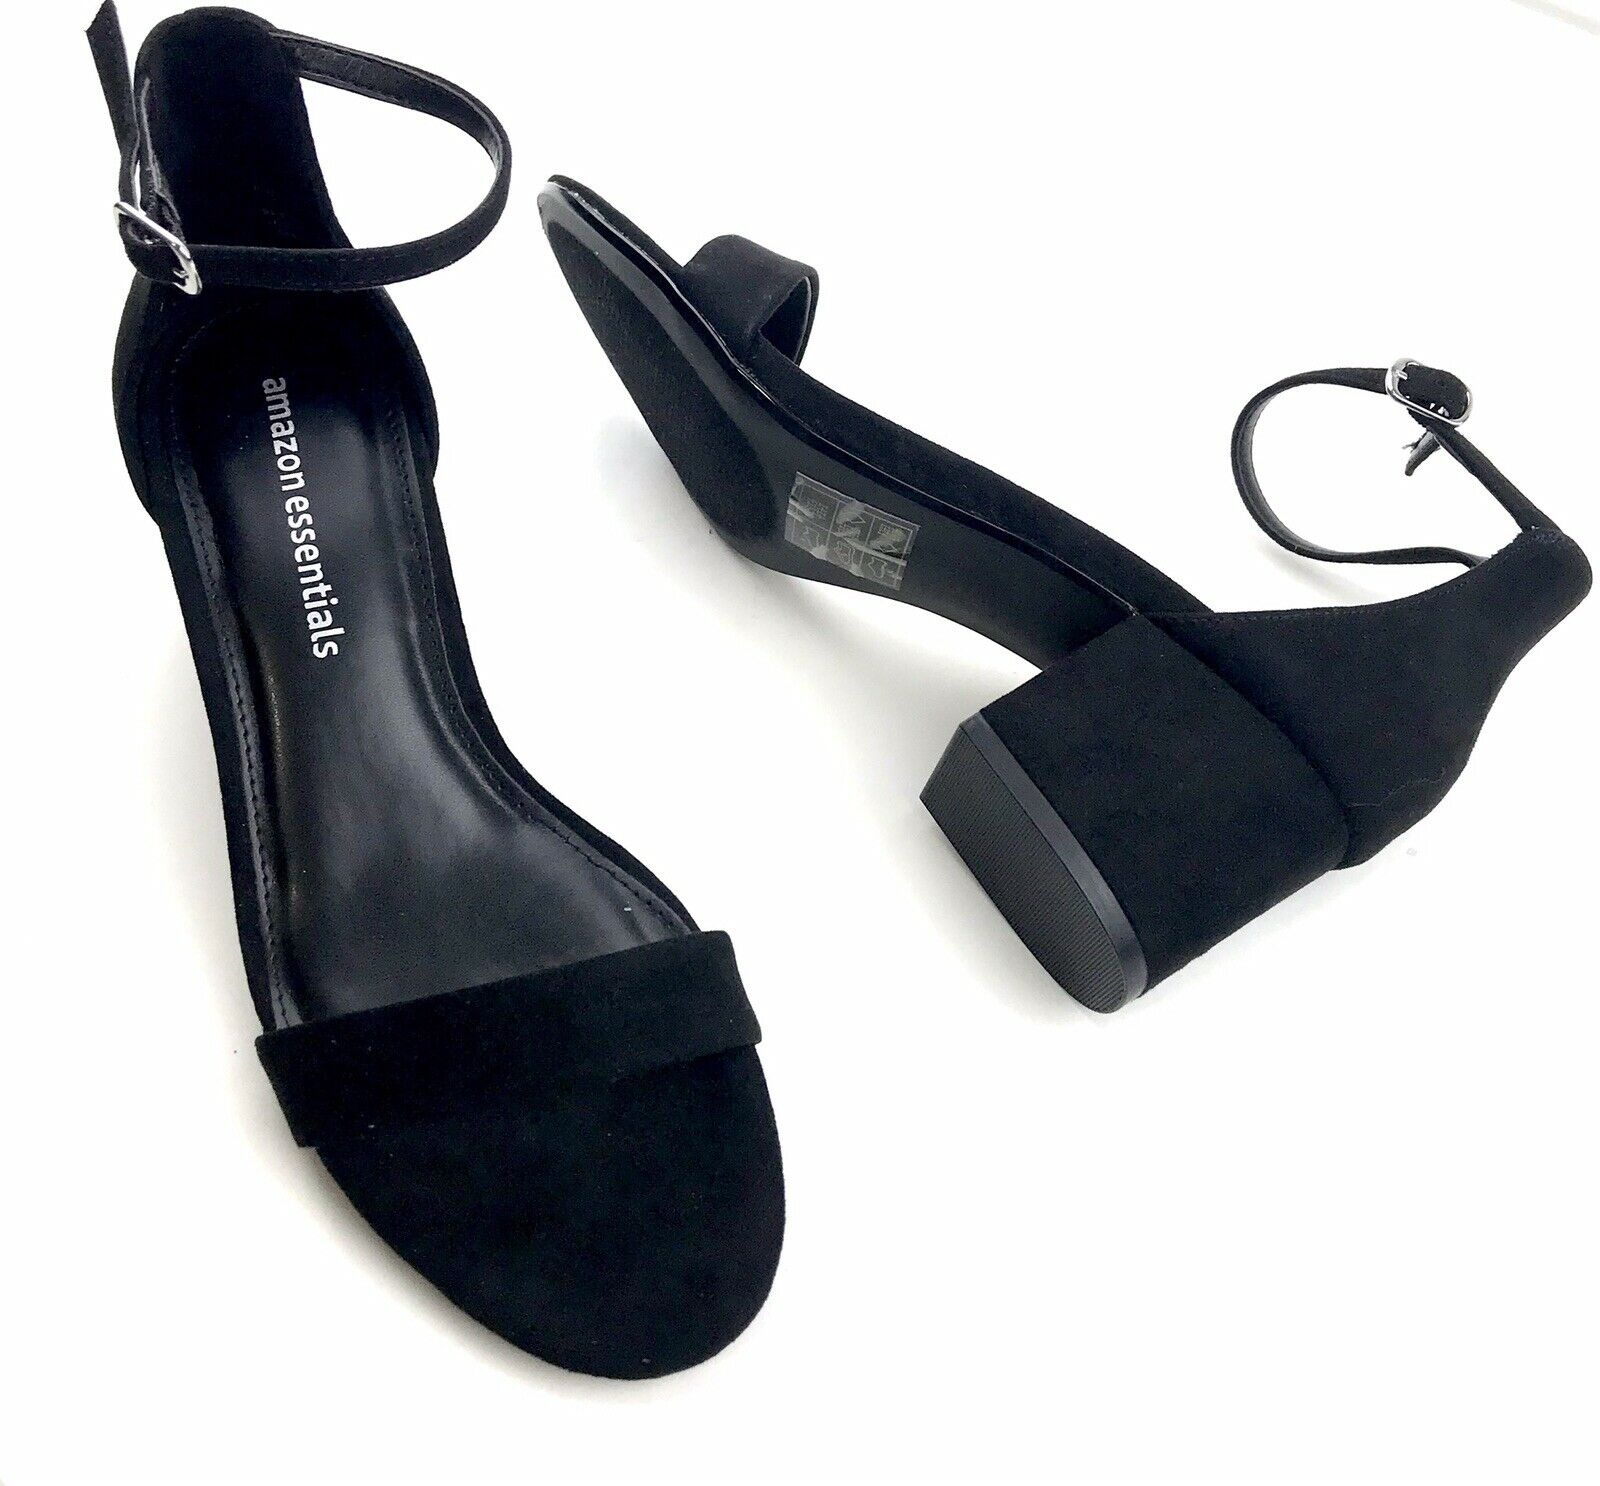 Amazon Essentials Womens Nola Style Black Open Toe Heels Sandals Shoes Size 7